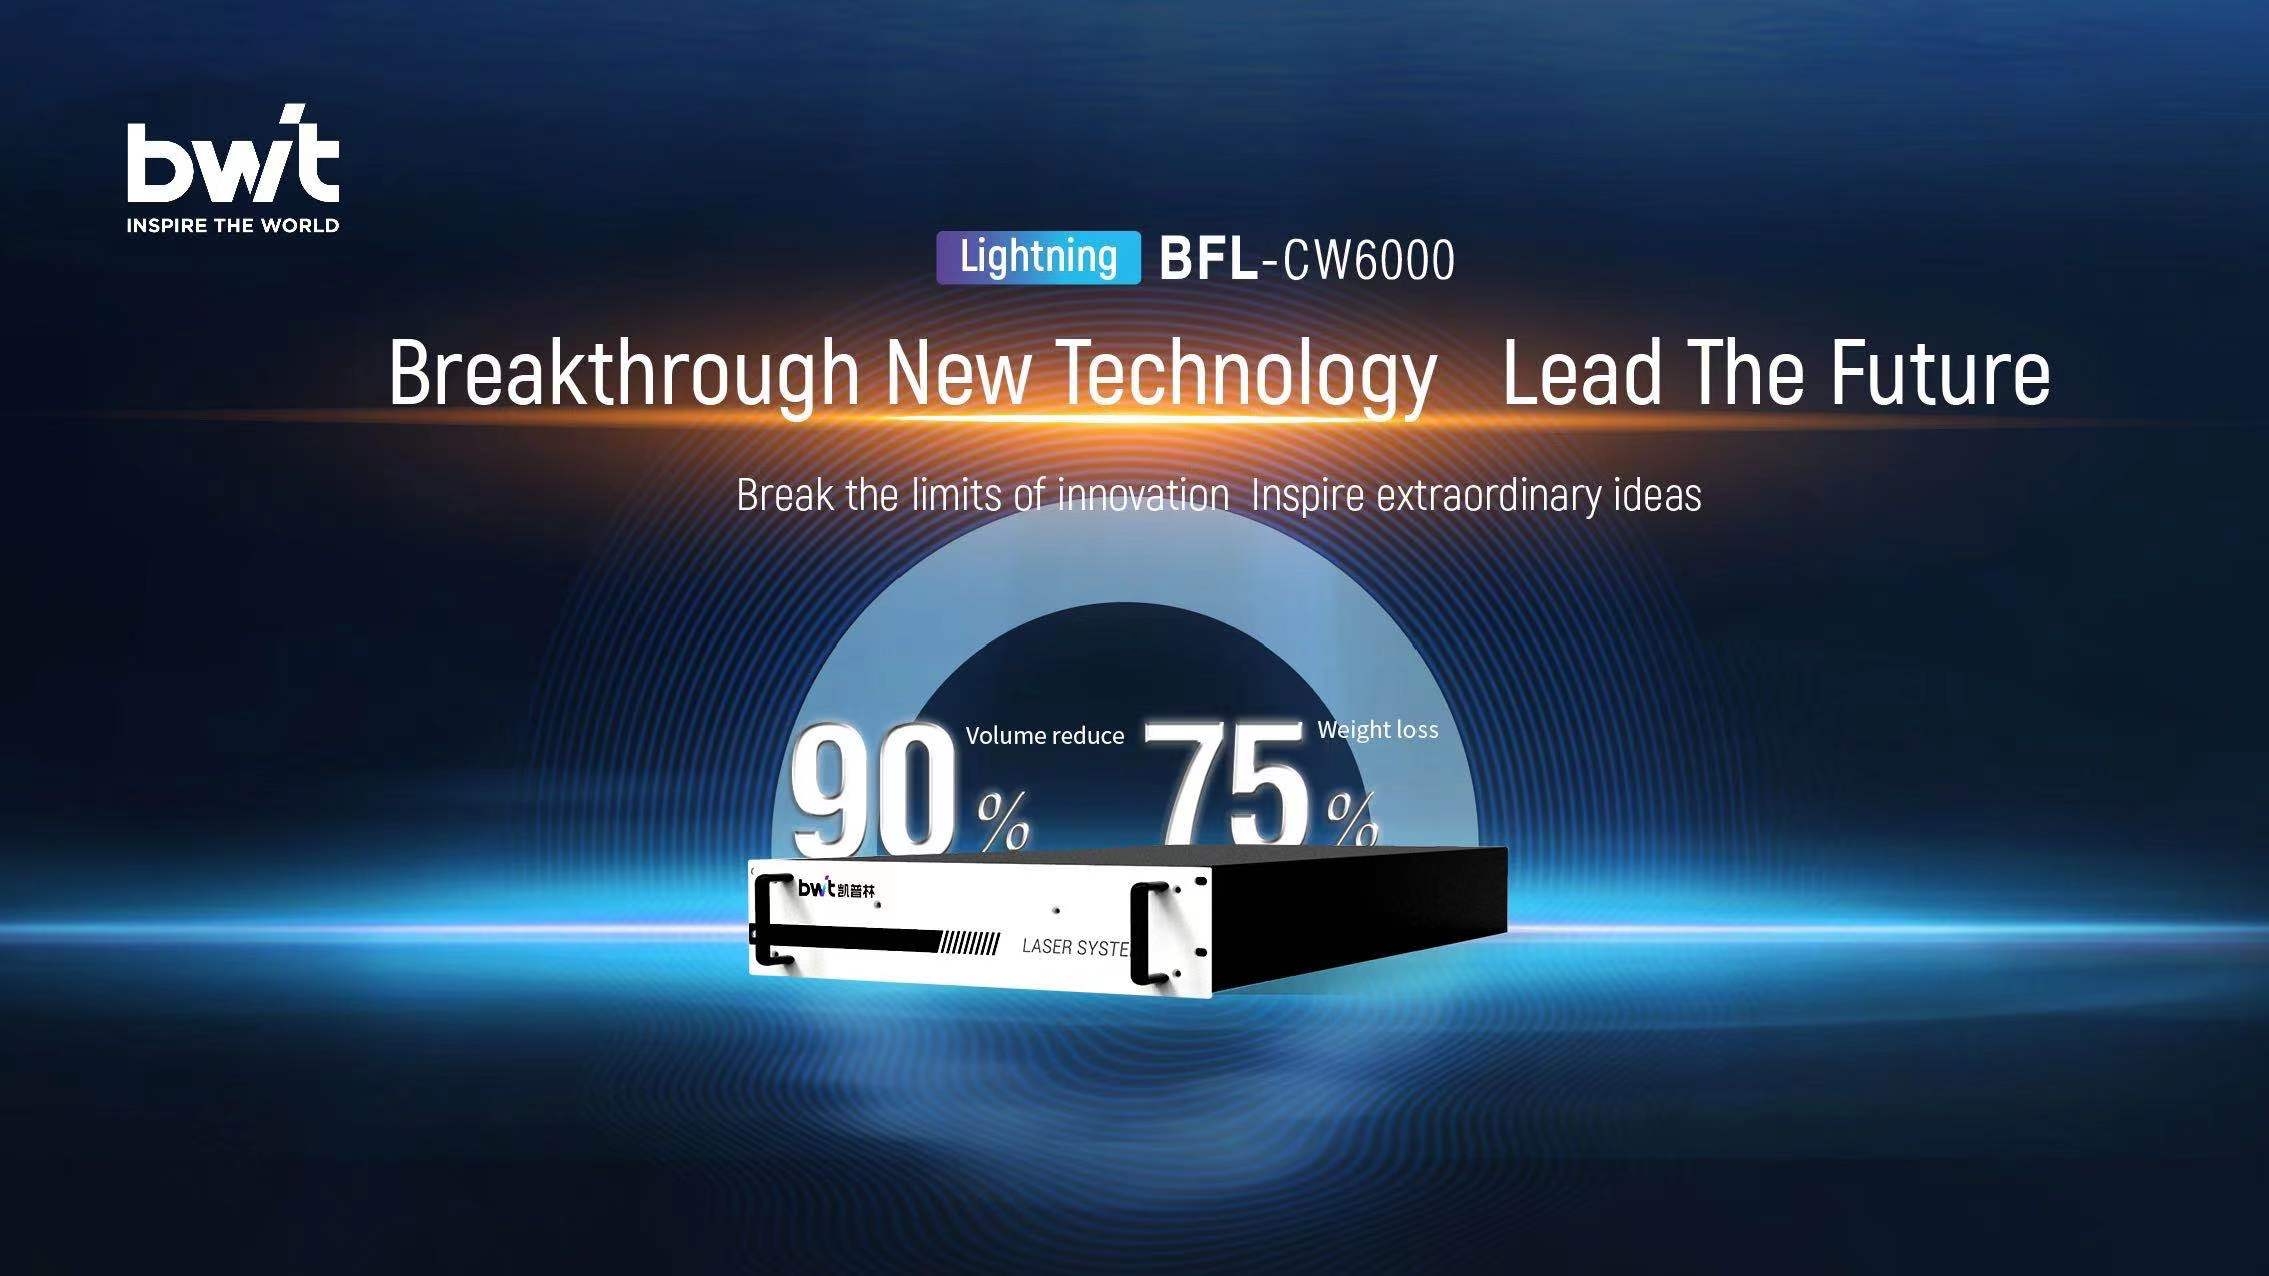 BWT lansearret Lightning 6000W fiber laser |Lytser, lichter en tûker